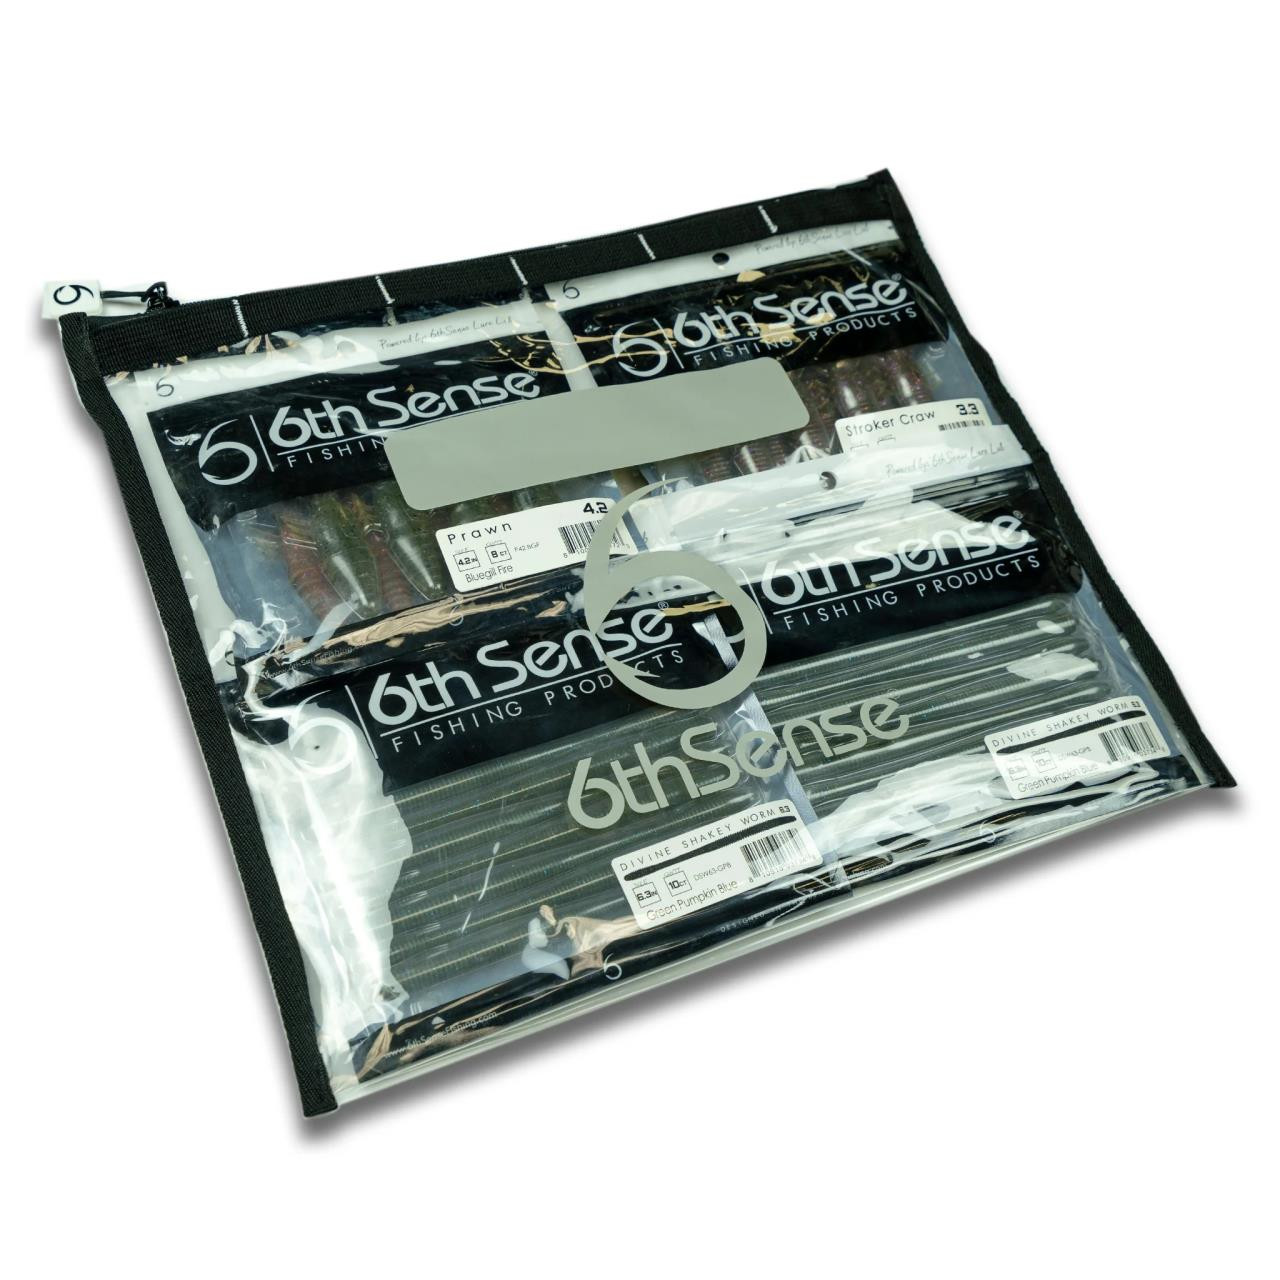 6th Sense BaitZip Pro Gusseted Tackle Storage Bag - Black